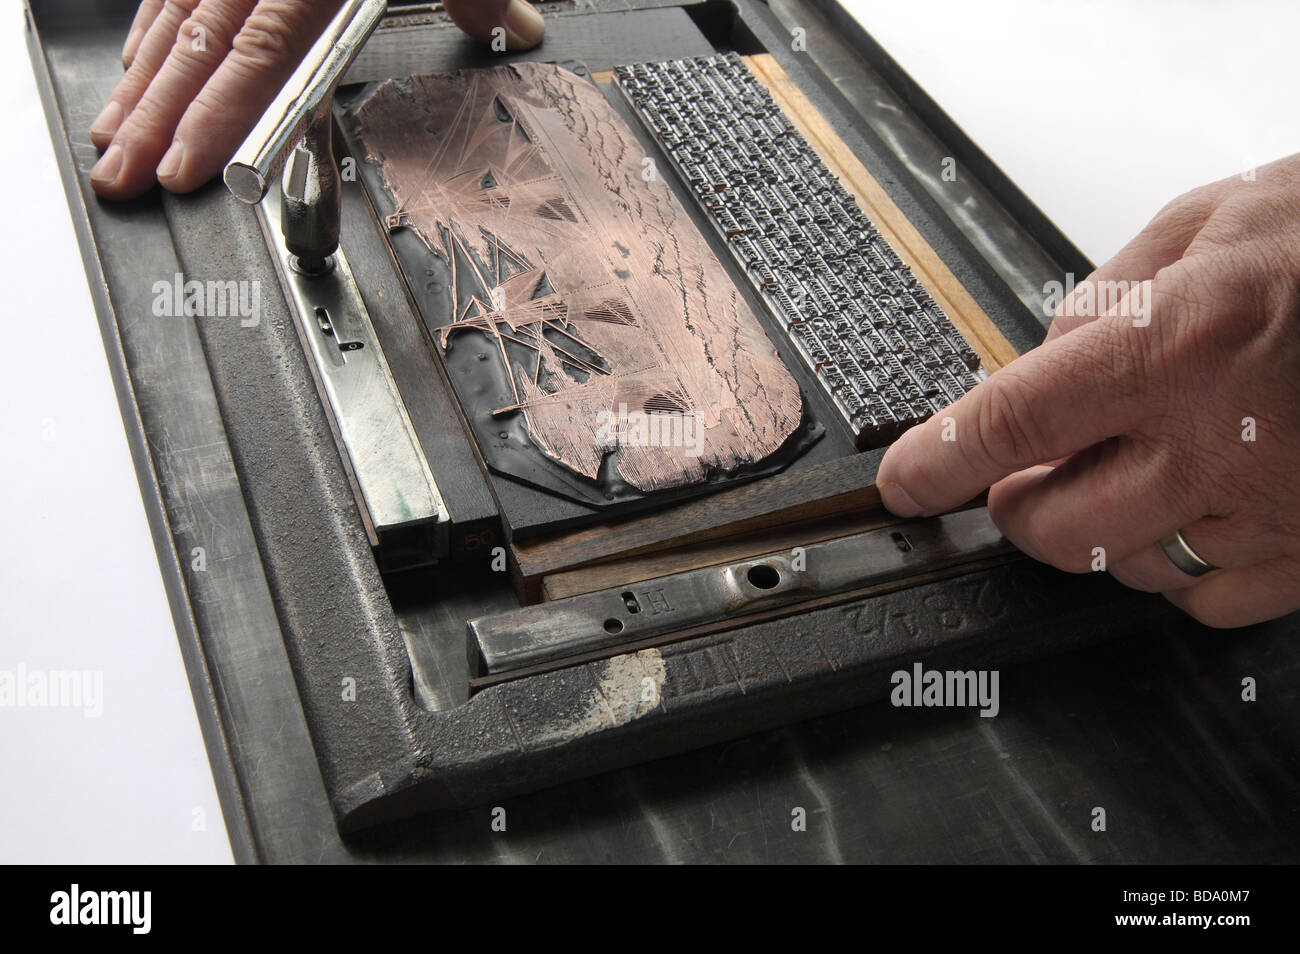 hands preparing printer's cut and letterpress metal type for printing Stock Photo